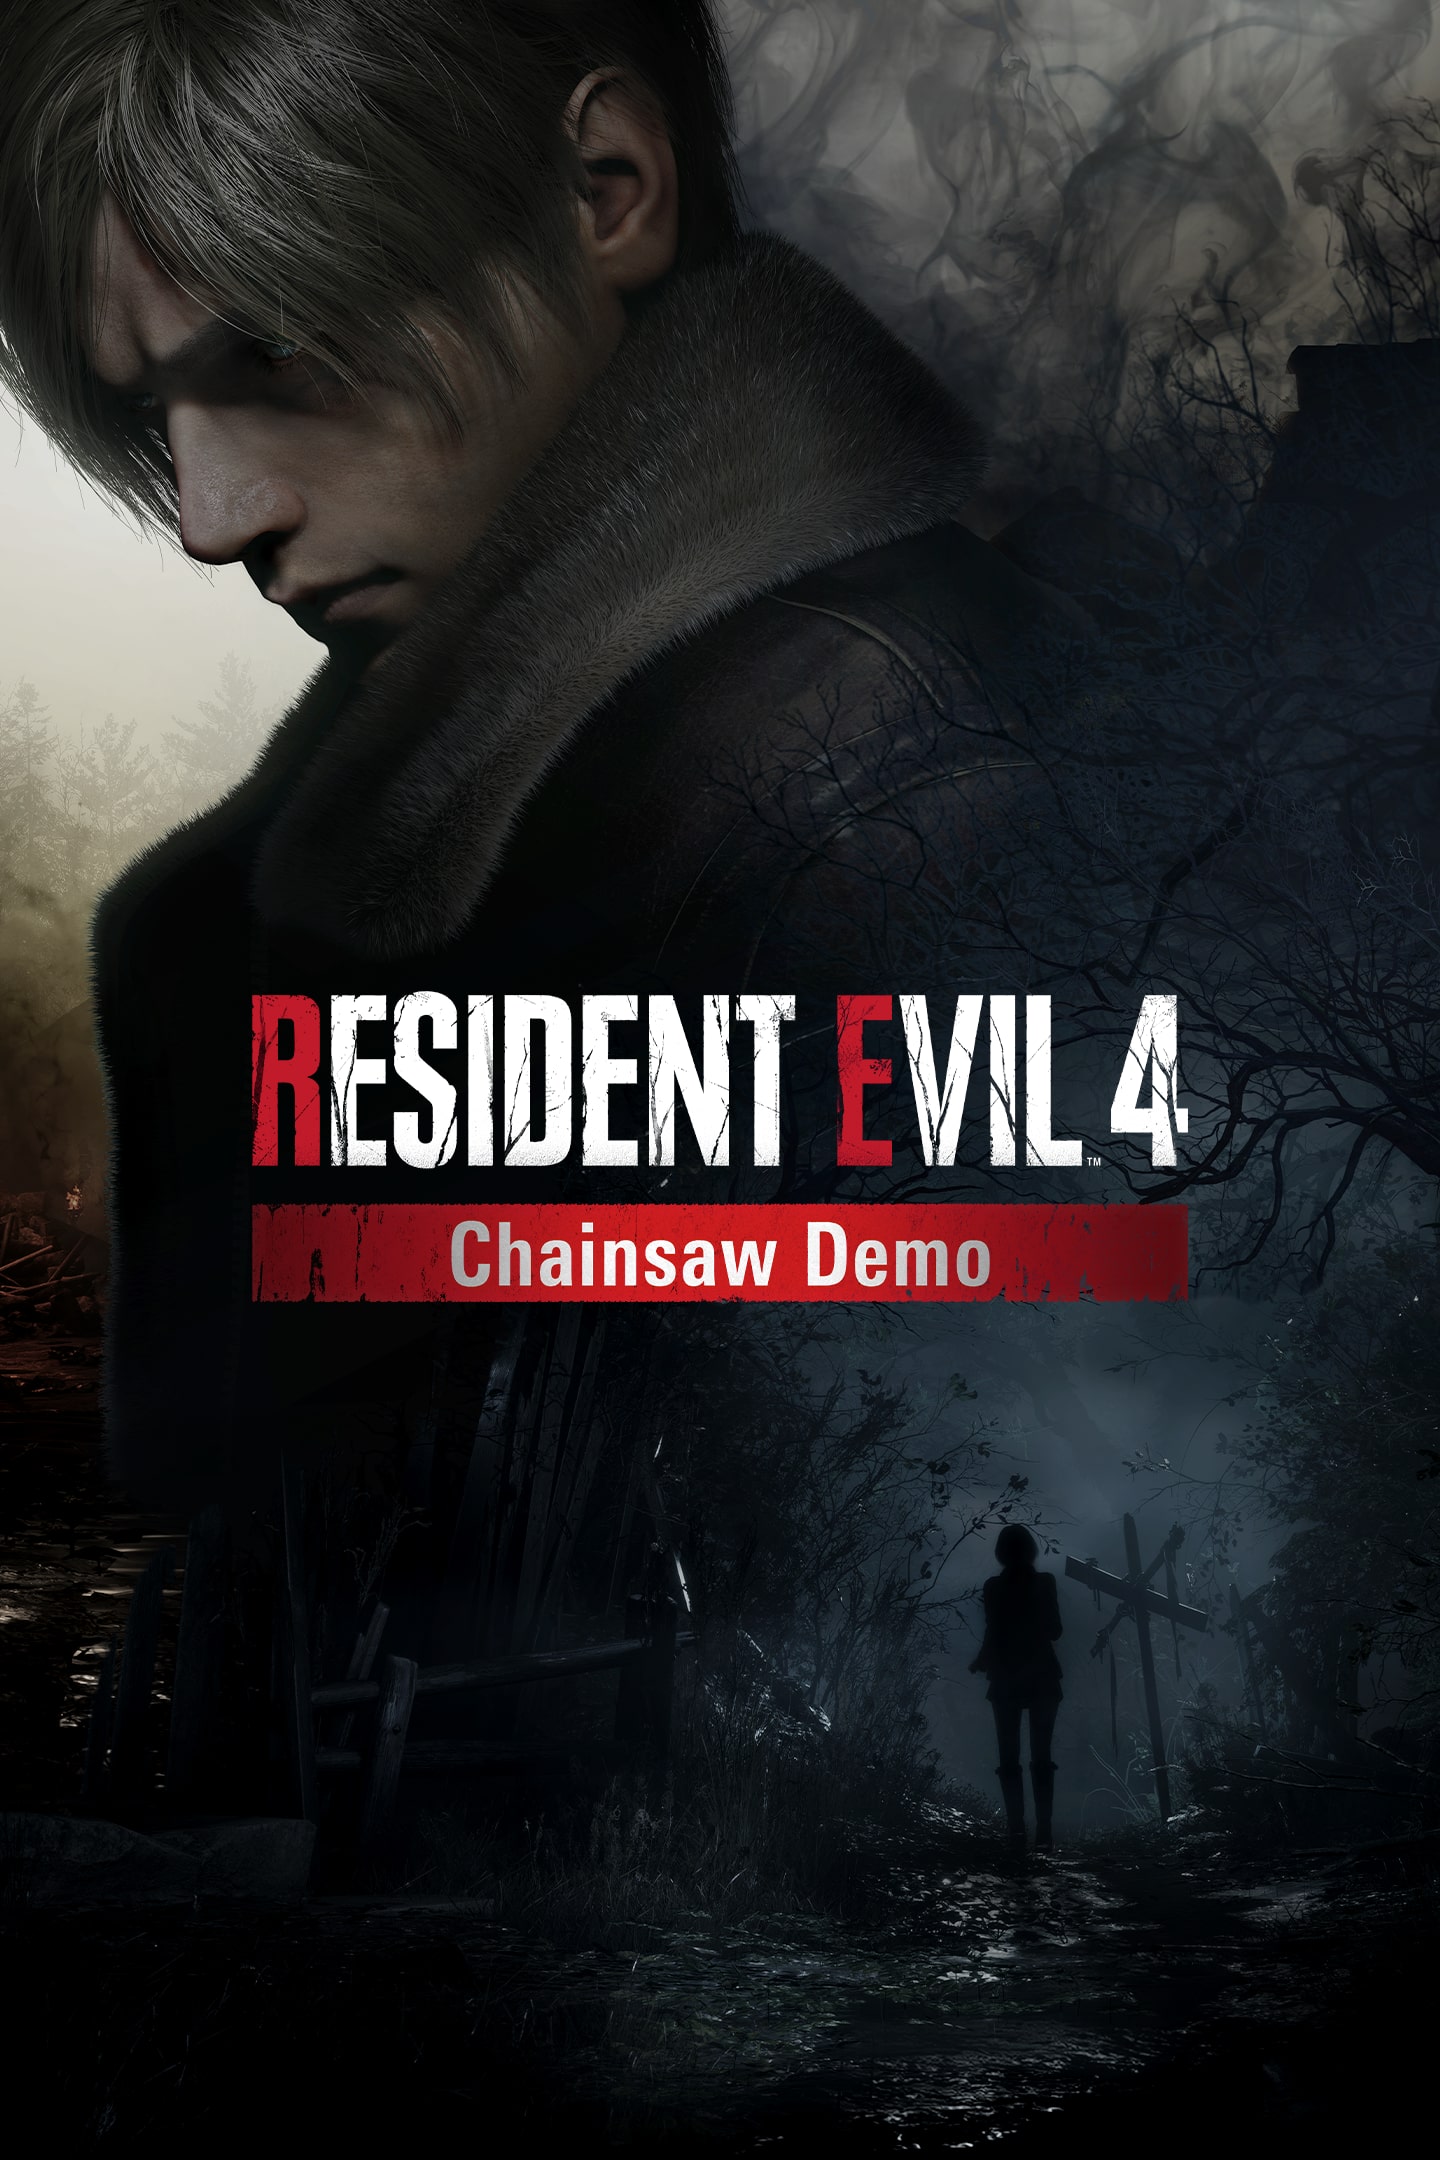 Resident Evil 4 Remake PS5 - Juegos Digitales - Play Digital Store